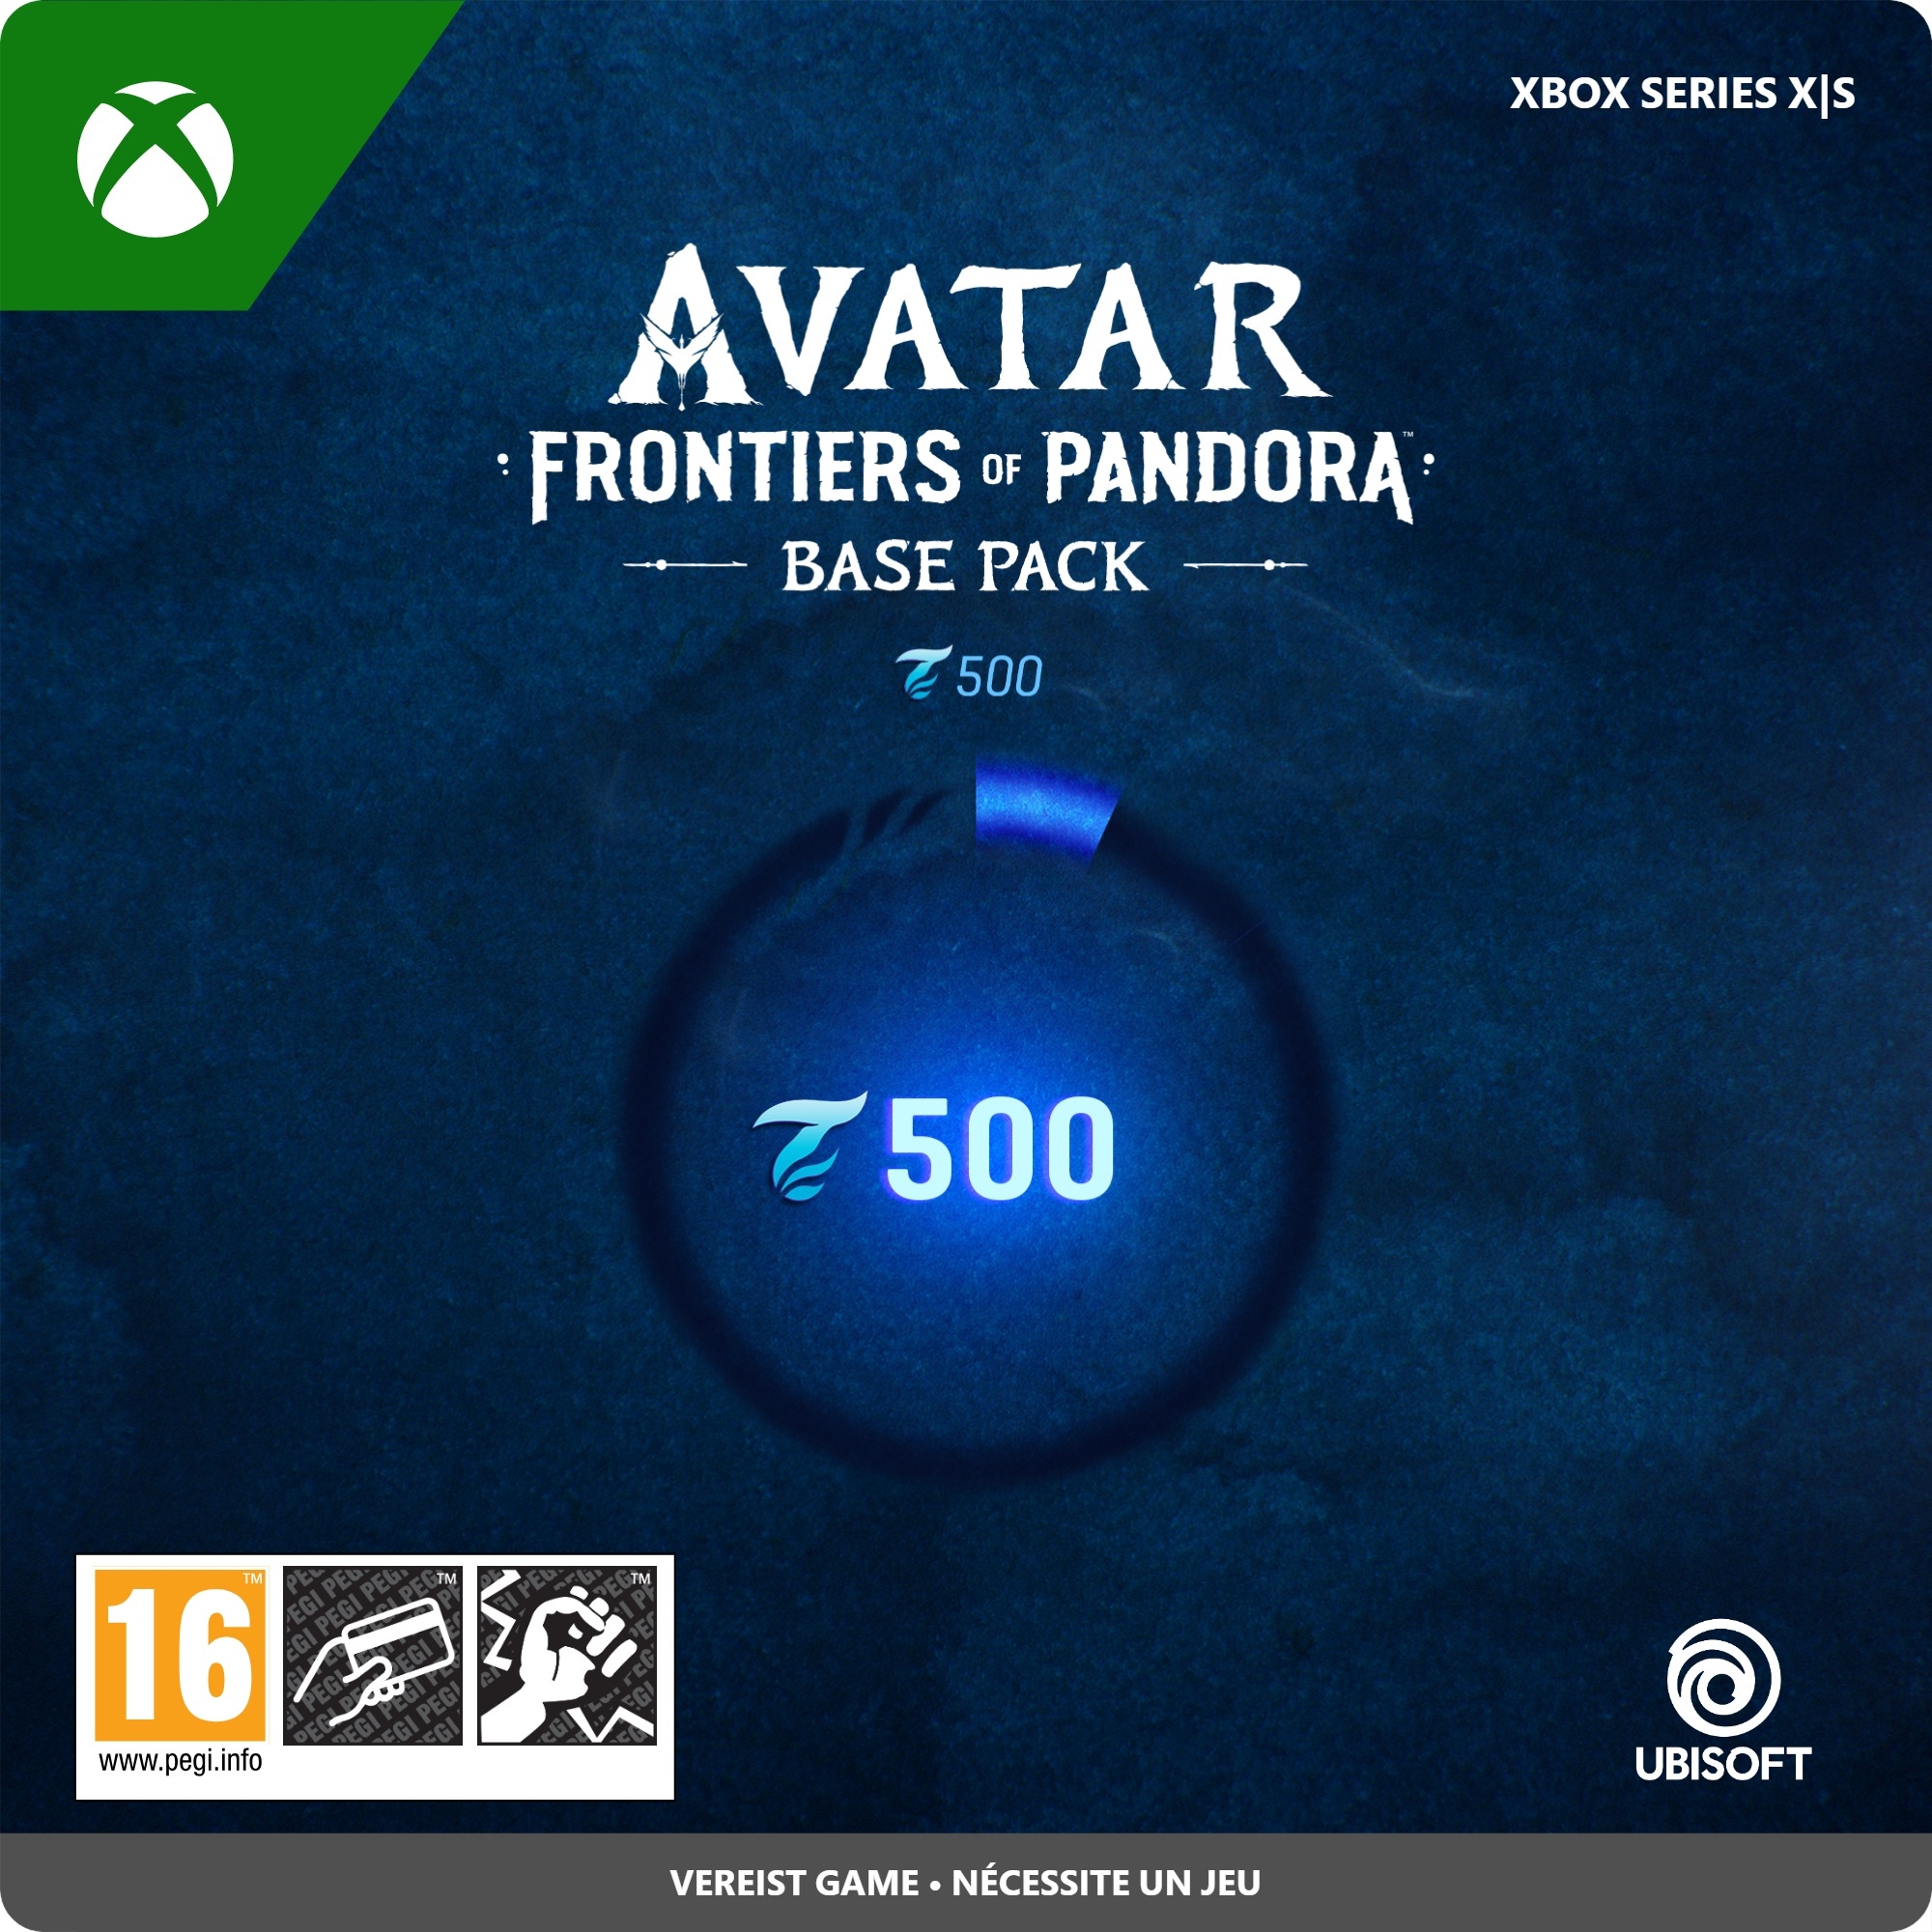 500 Xbox Avatar: Frontiers of Pandora Base Pack Tokens (direct digitaal geleverd)